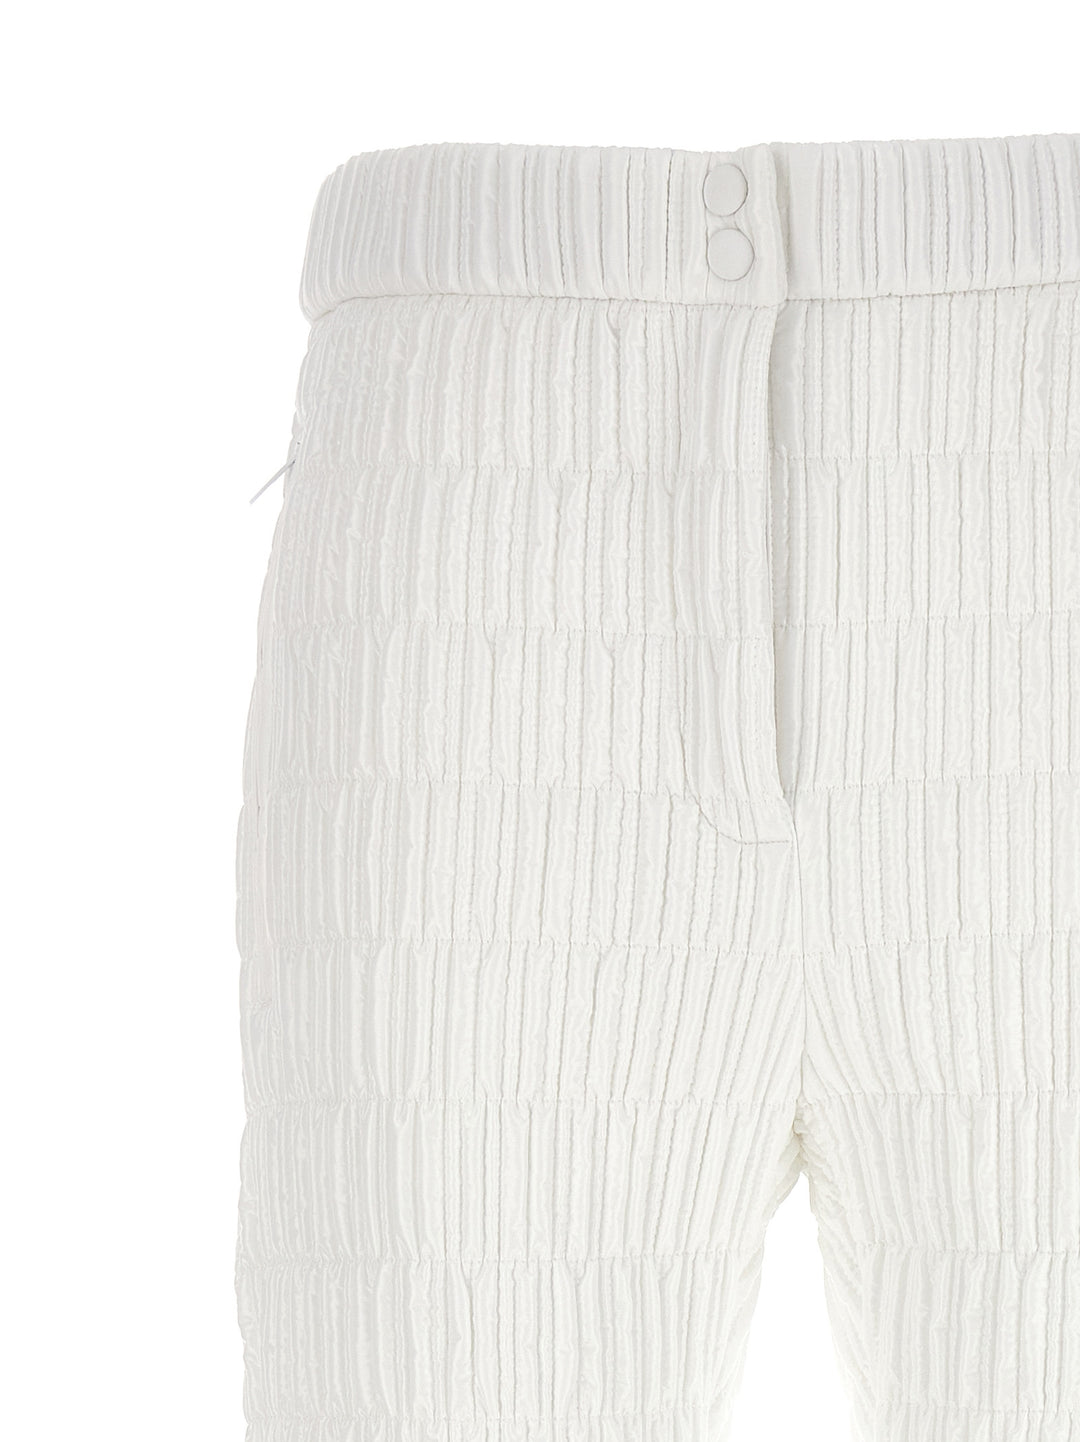 Quilted Pantaloni Bianco